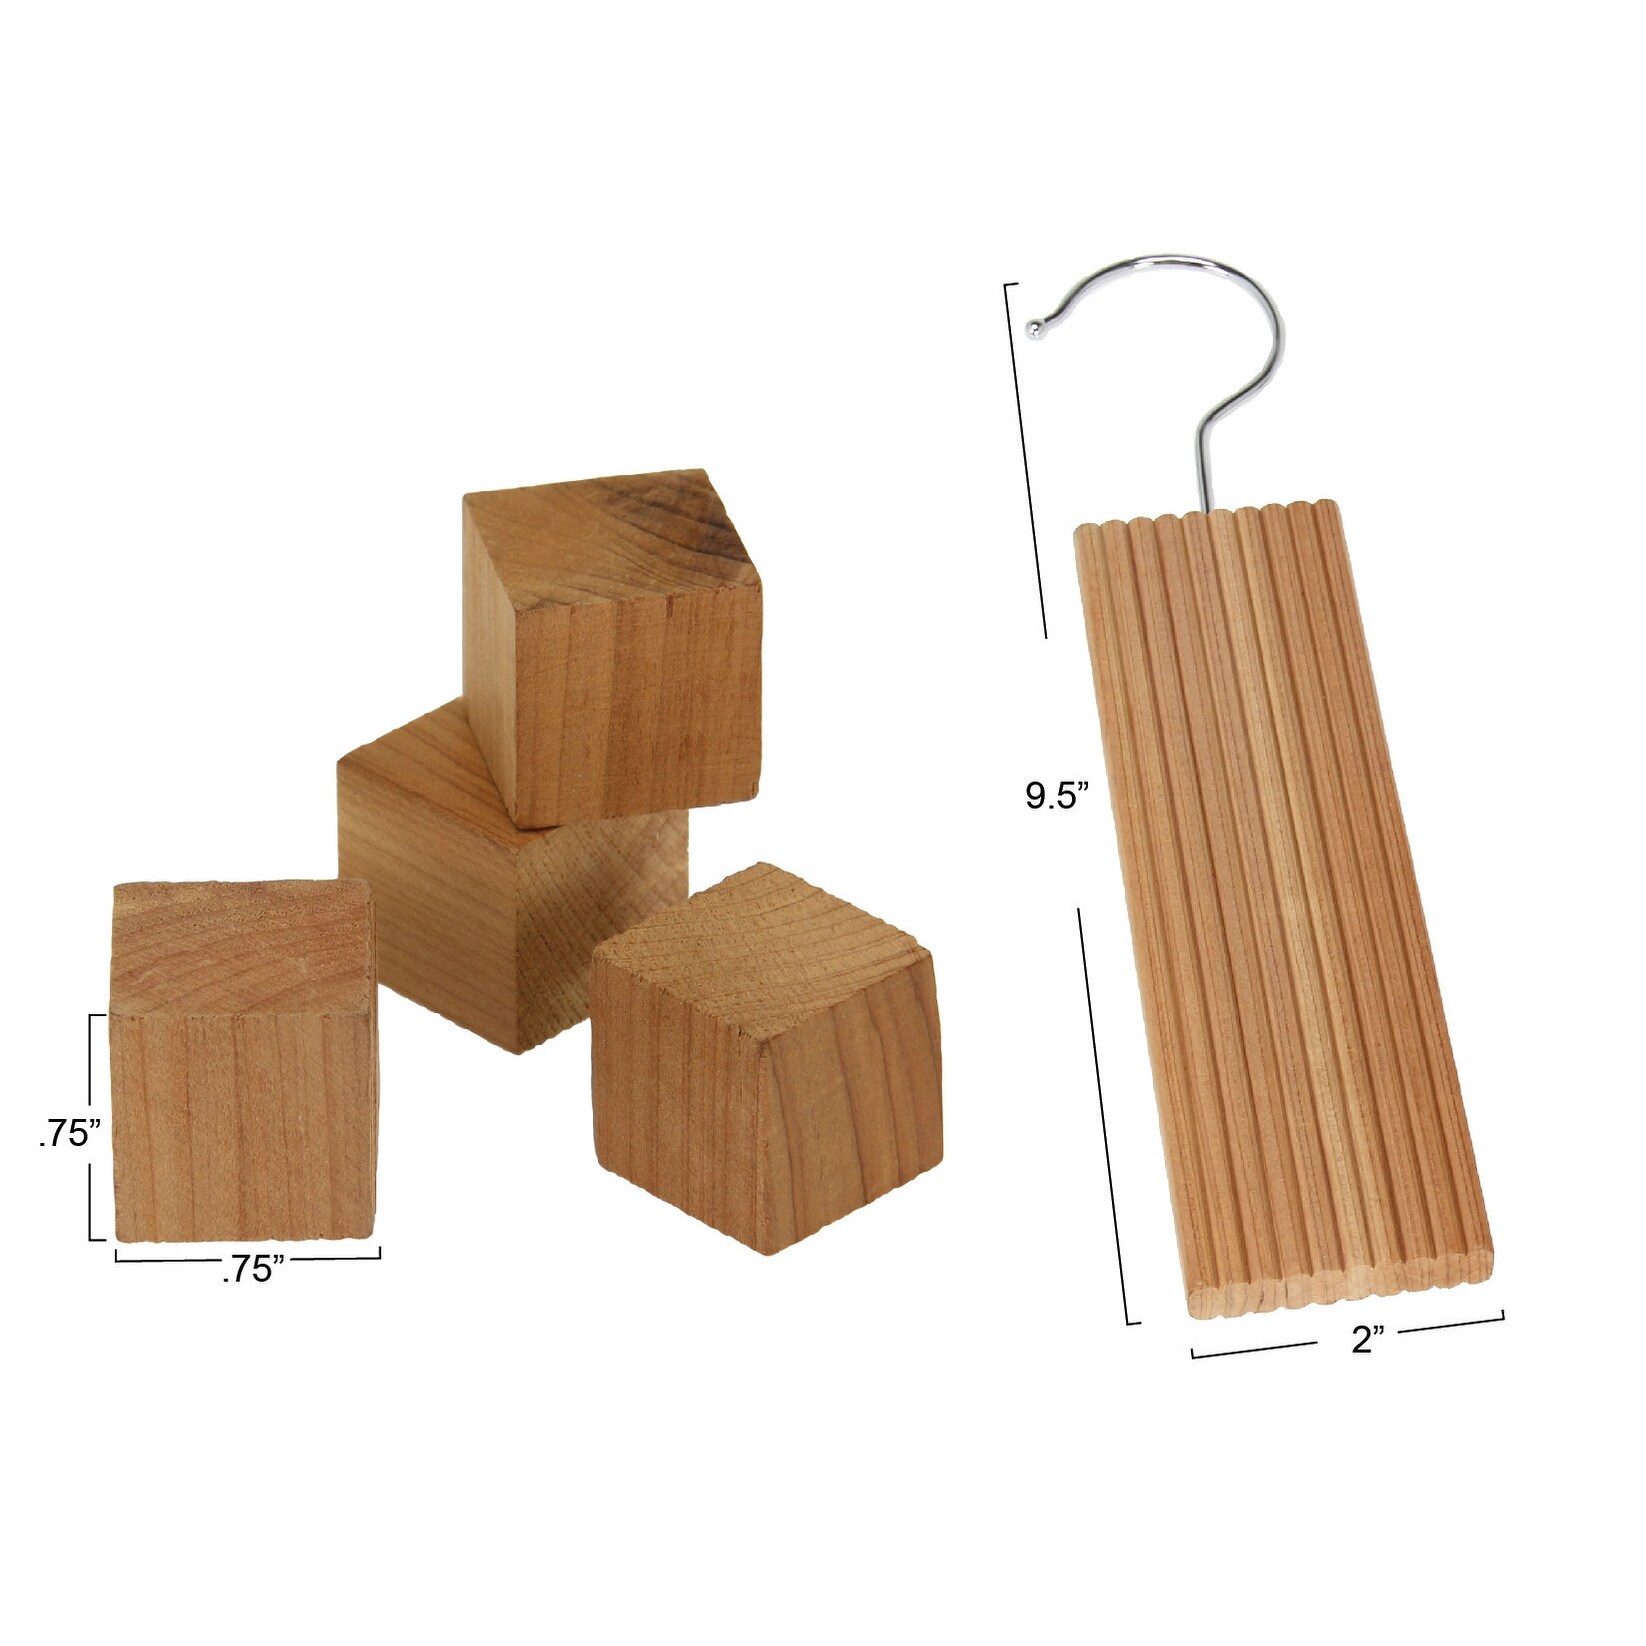 Household Essentials Cedar Blocks & Cubes Moth Repellent Kit